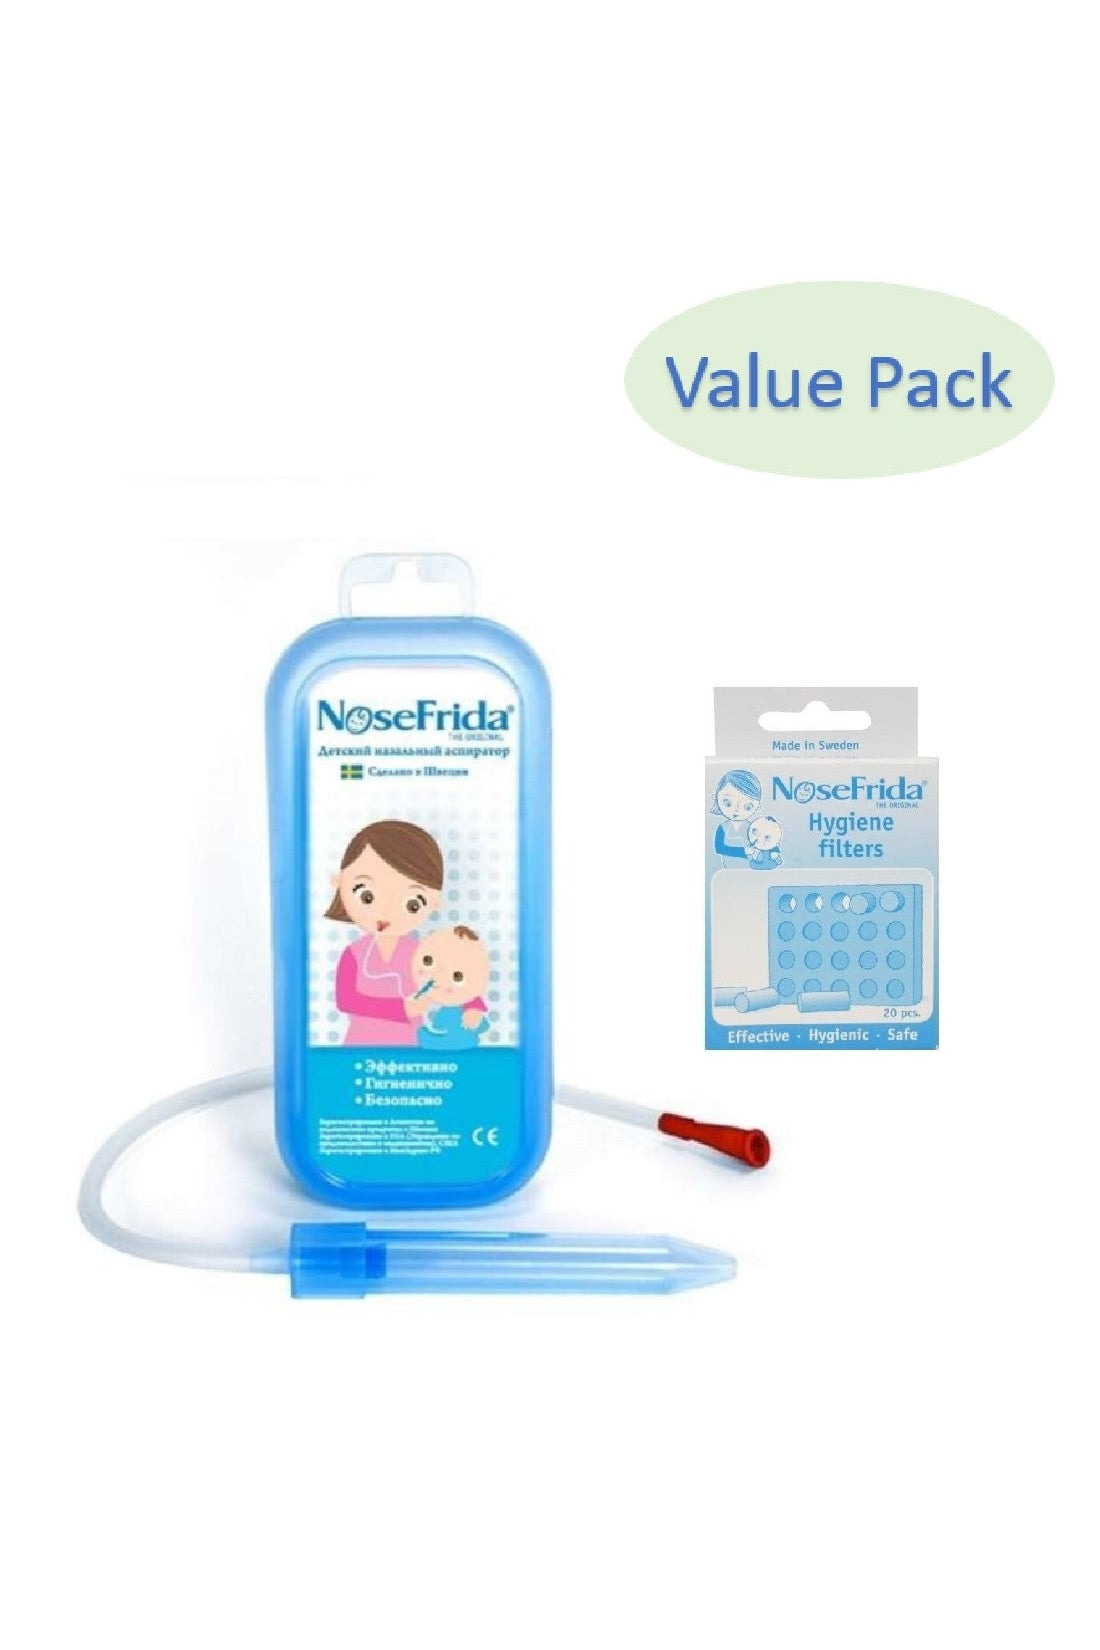 Nosefrida Nasal Aspirator Replacement Hygiene Filters - 20 pack